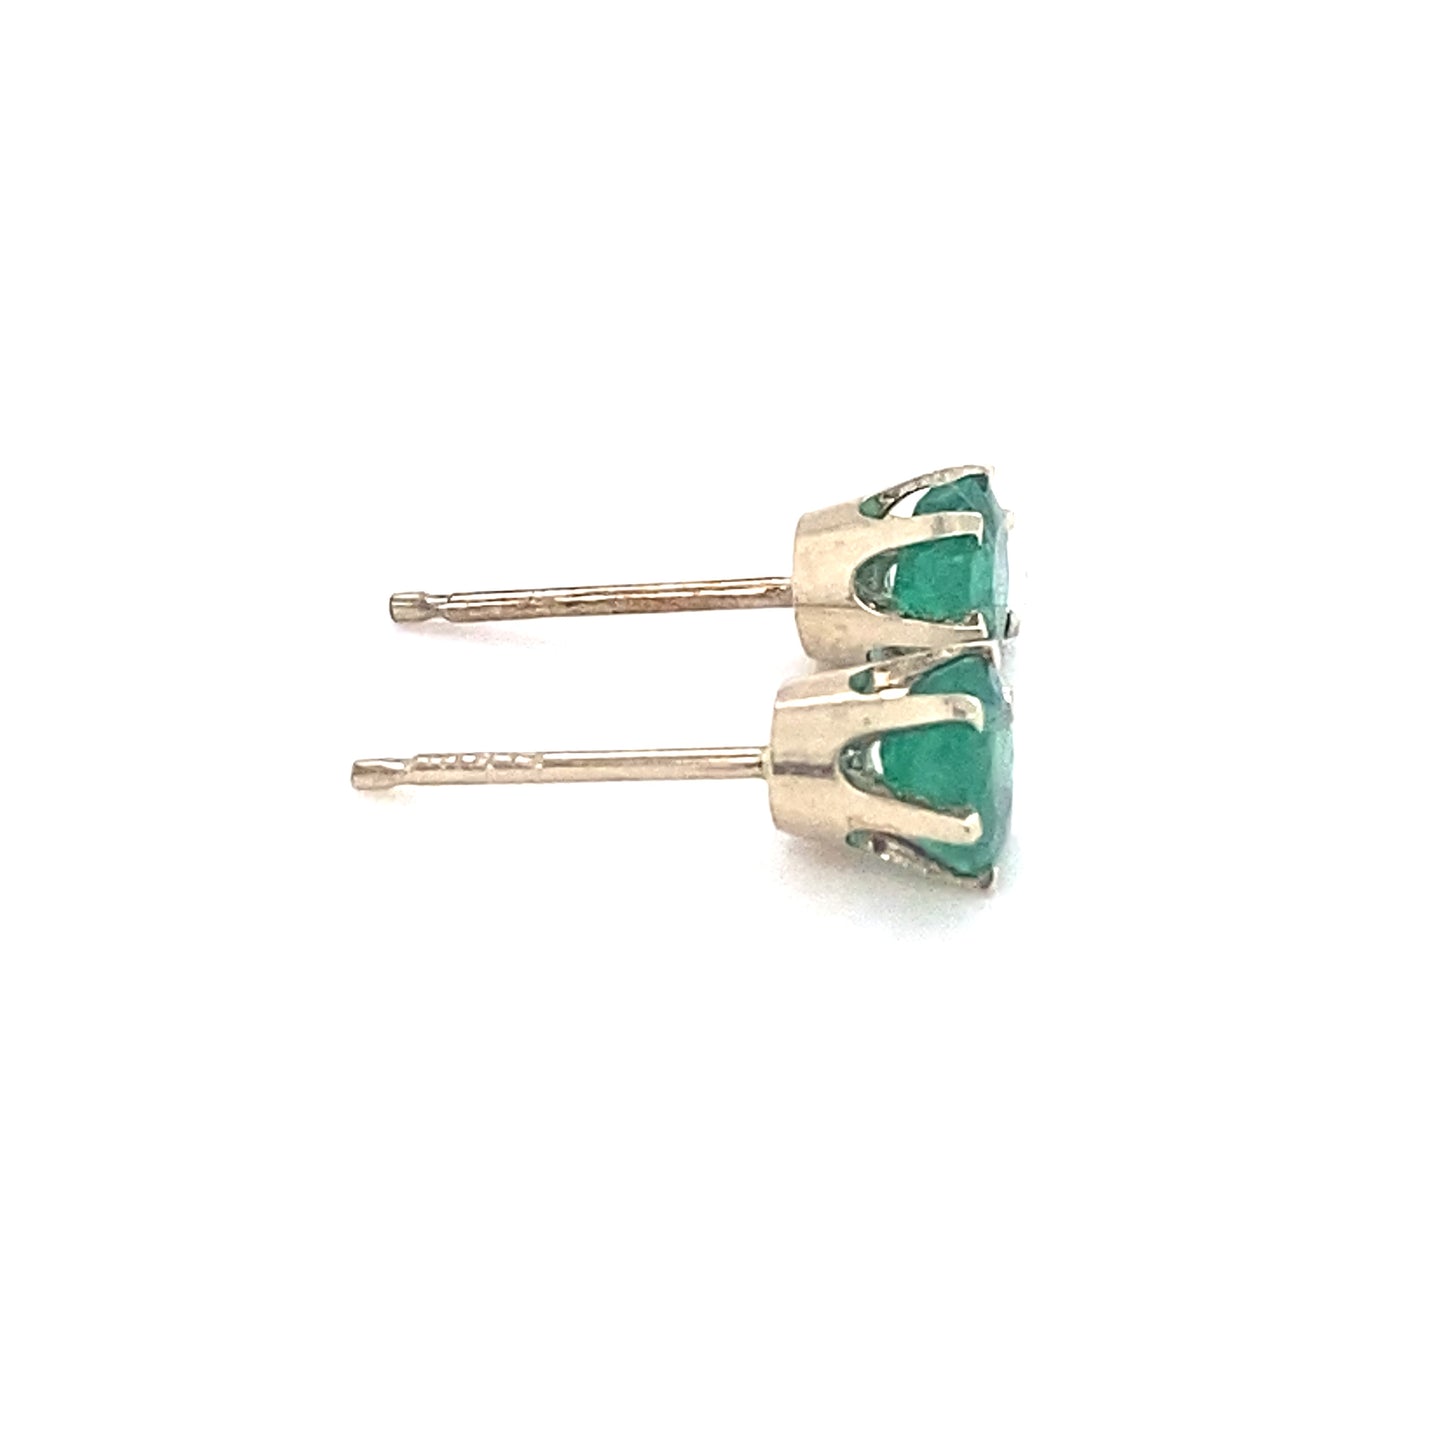 Circa 1960s 1.0 Carat Colombian Emerald Stud Earrings in 14K White Gold